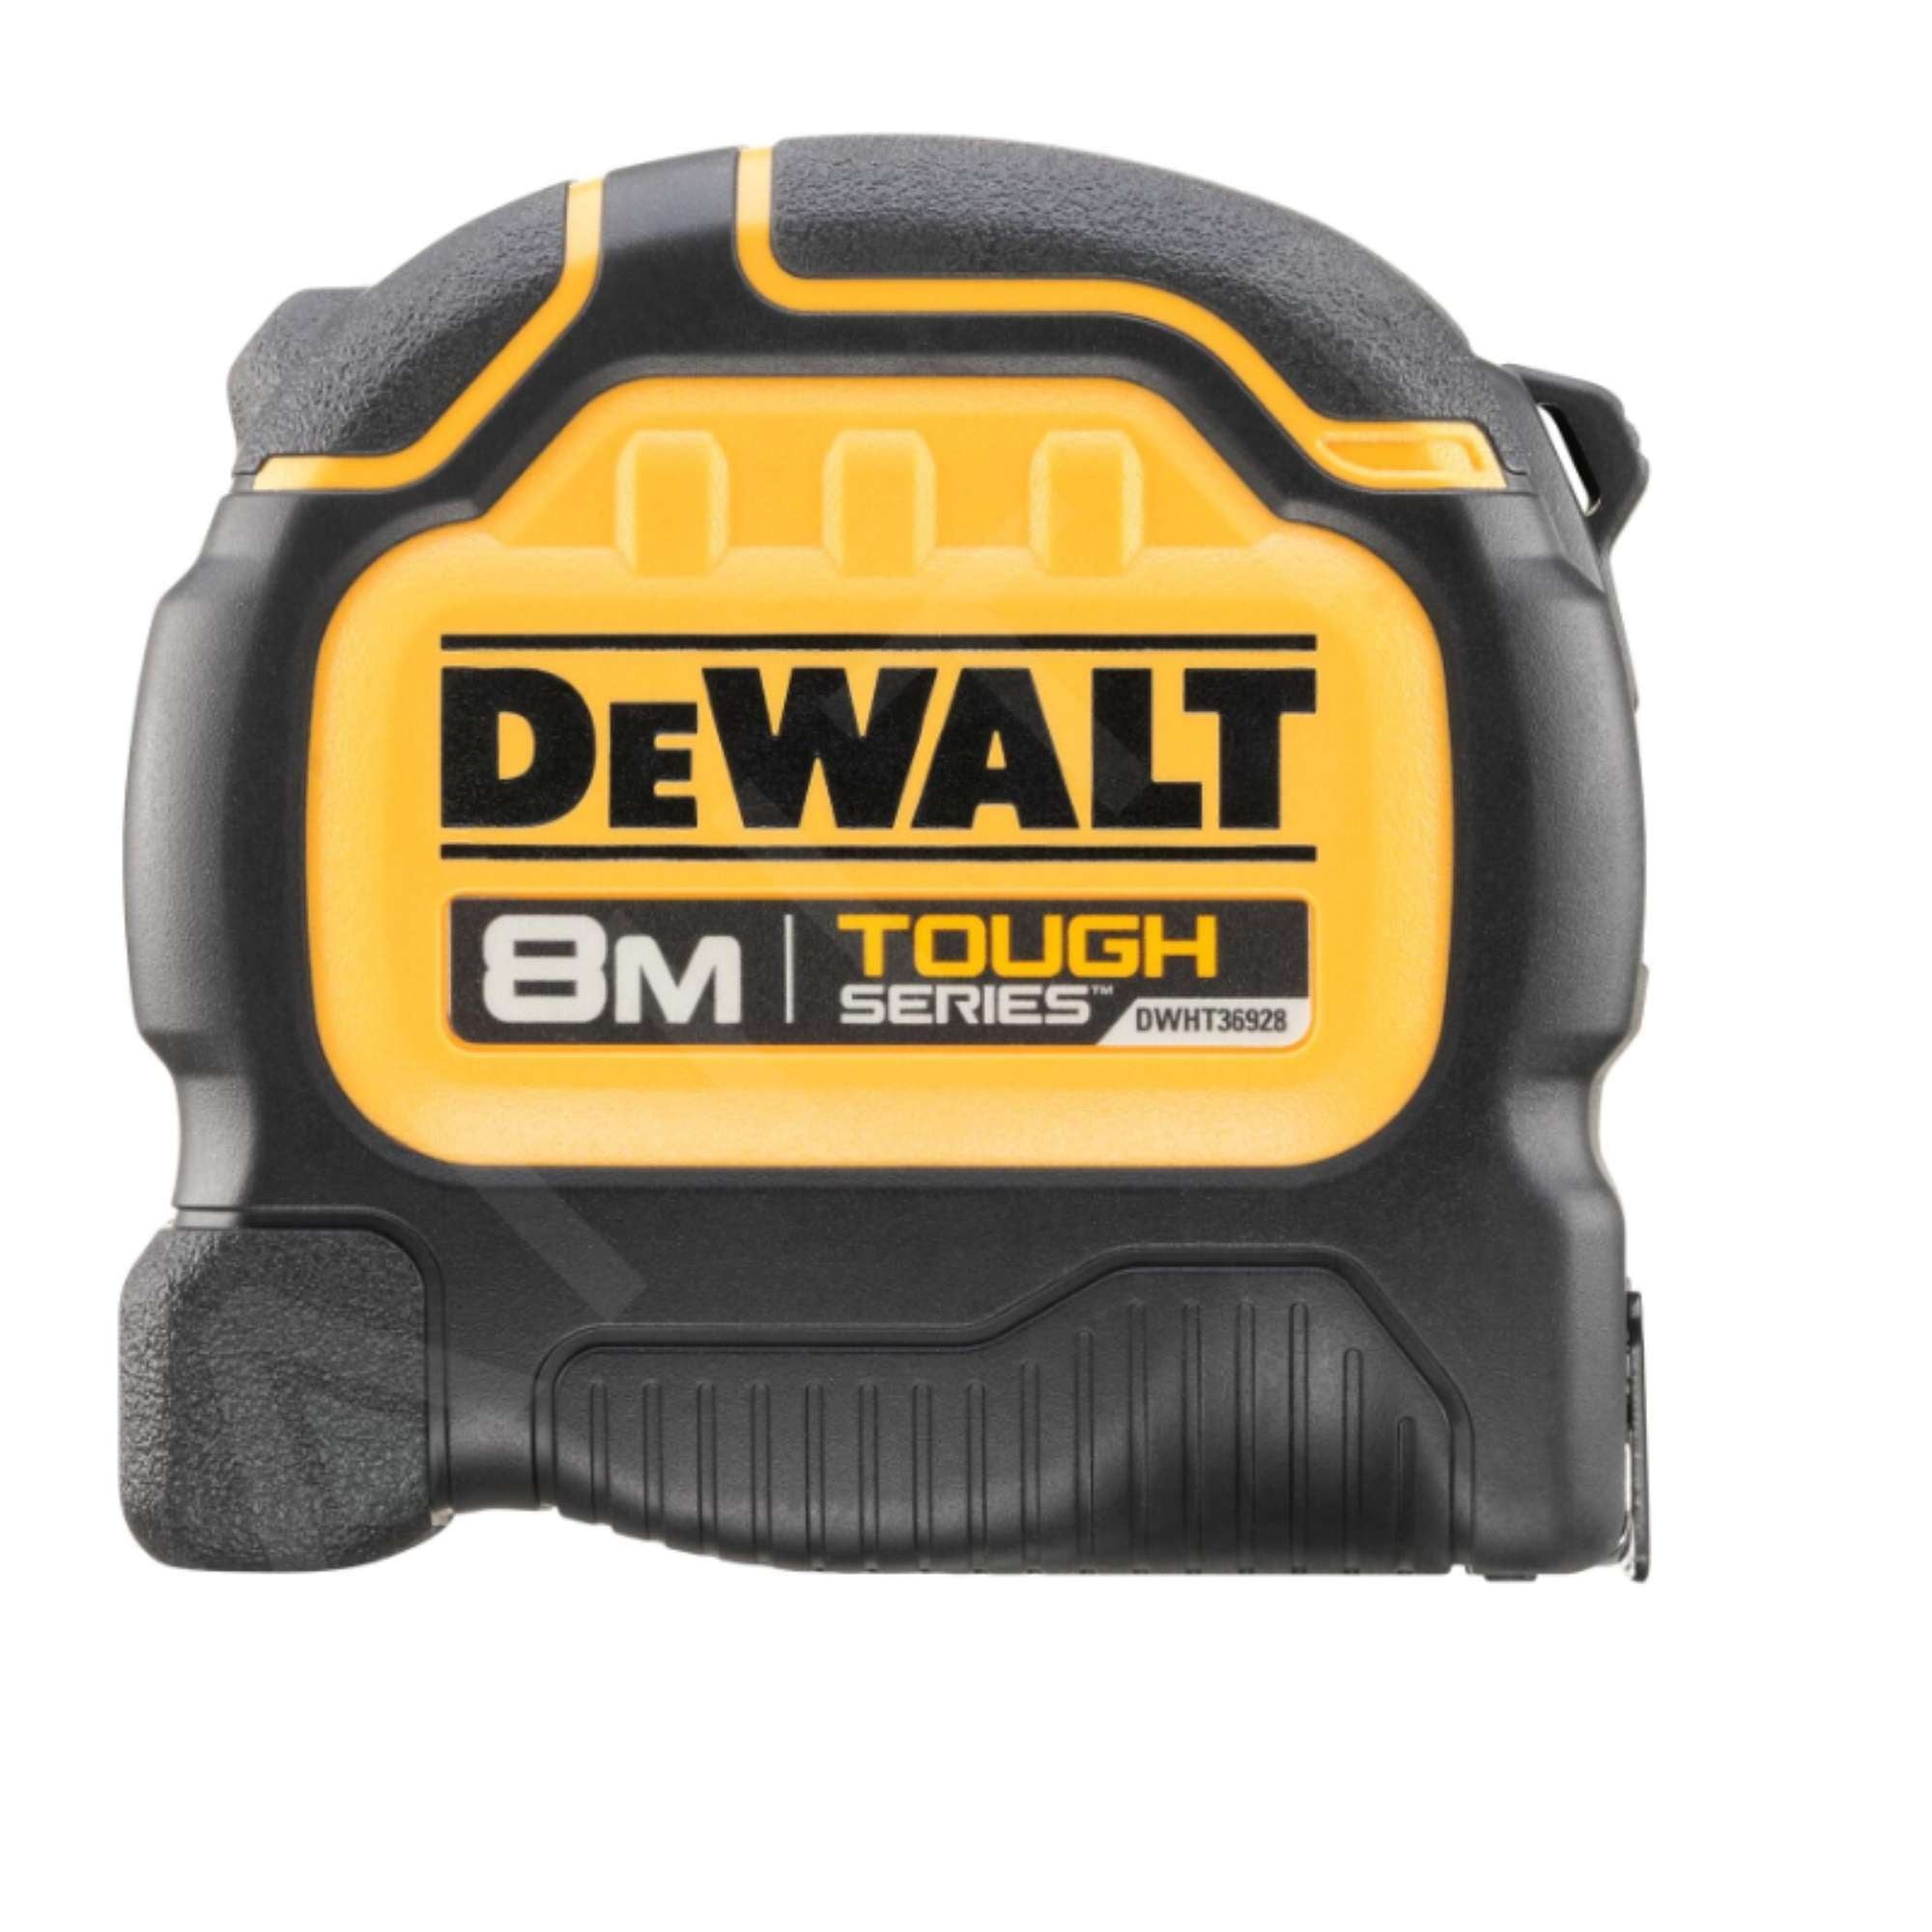 Premium Tough Series 8m Flexometer - Dewalt DWHT36928-0